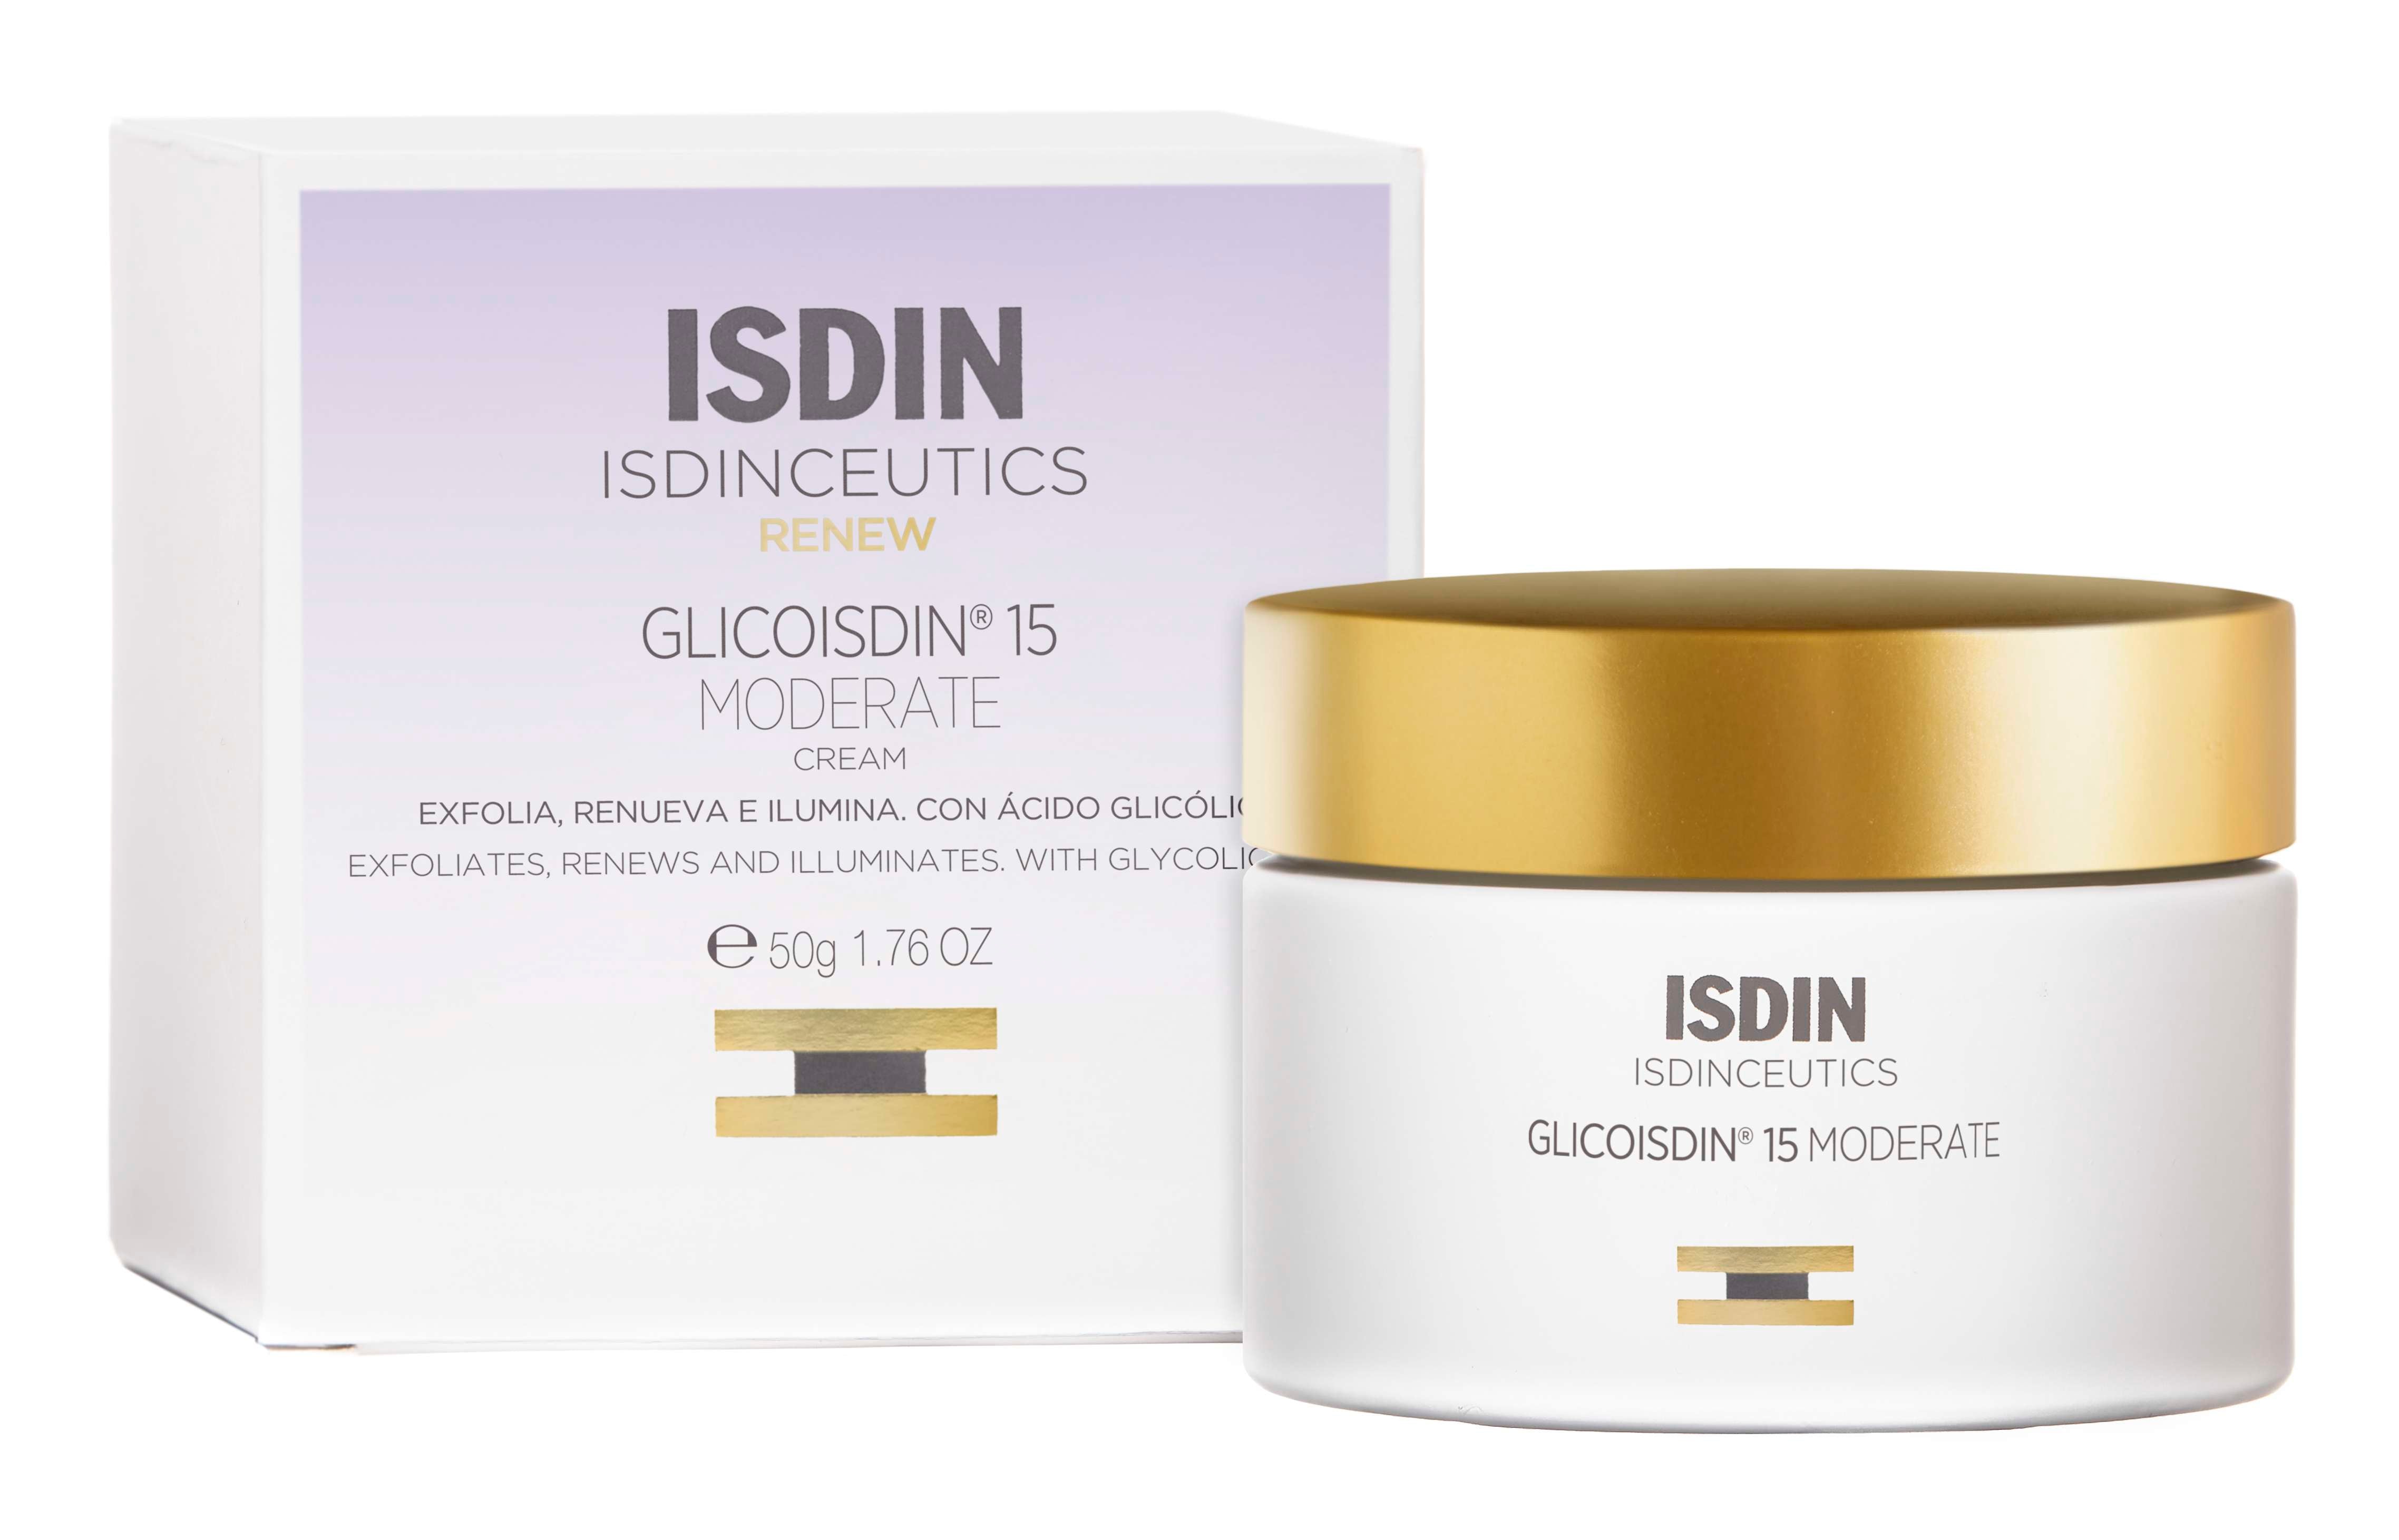 ISDIN Isdinceutics Glicoisdin Creme 15% 50g- Creme efeito peeling facial com ácido glicólico